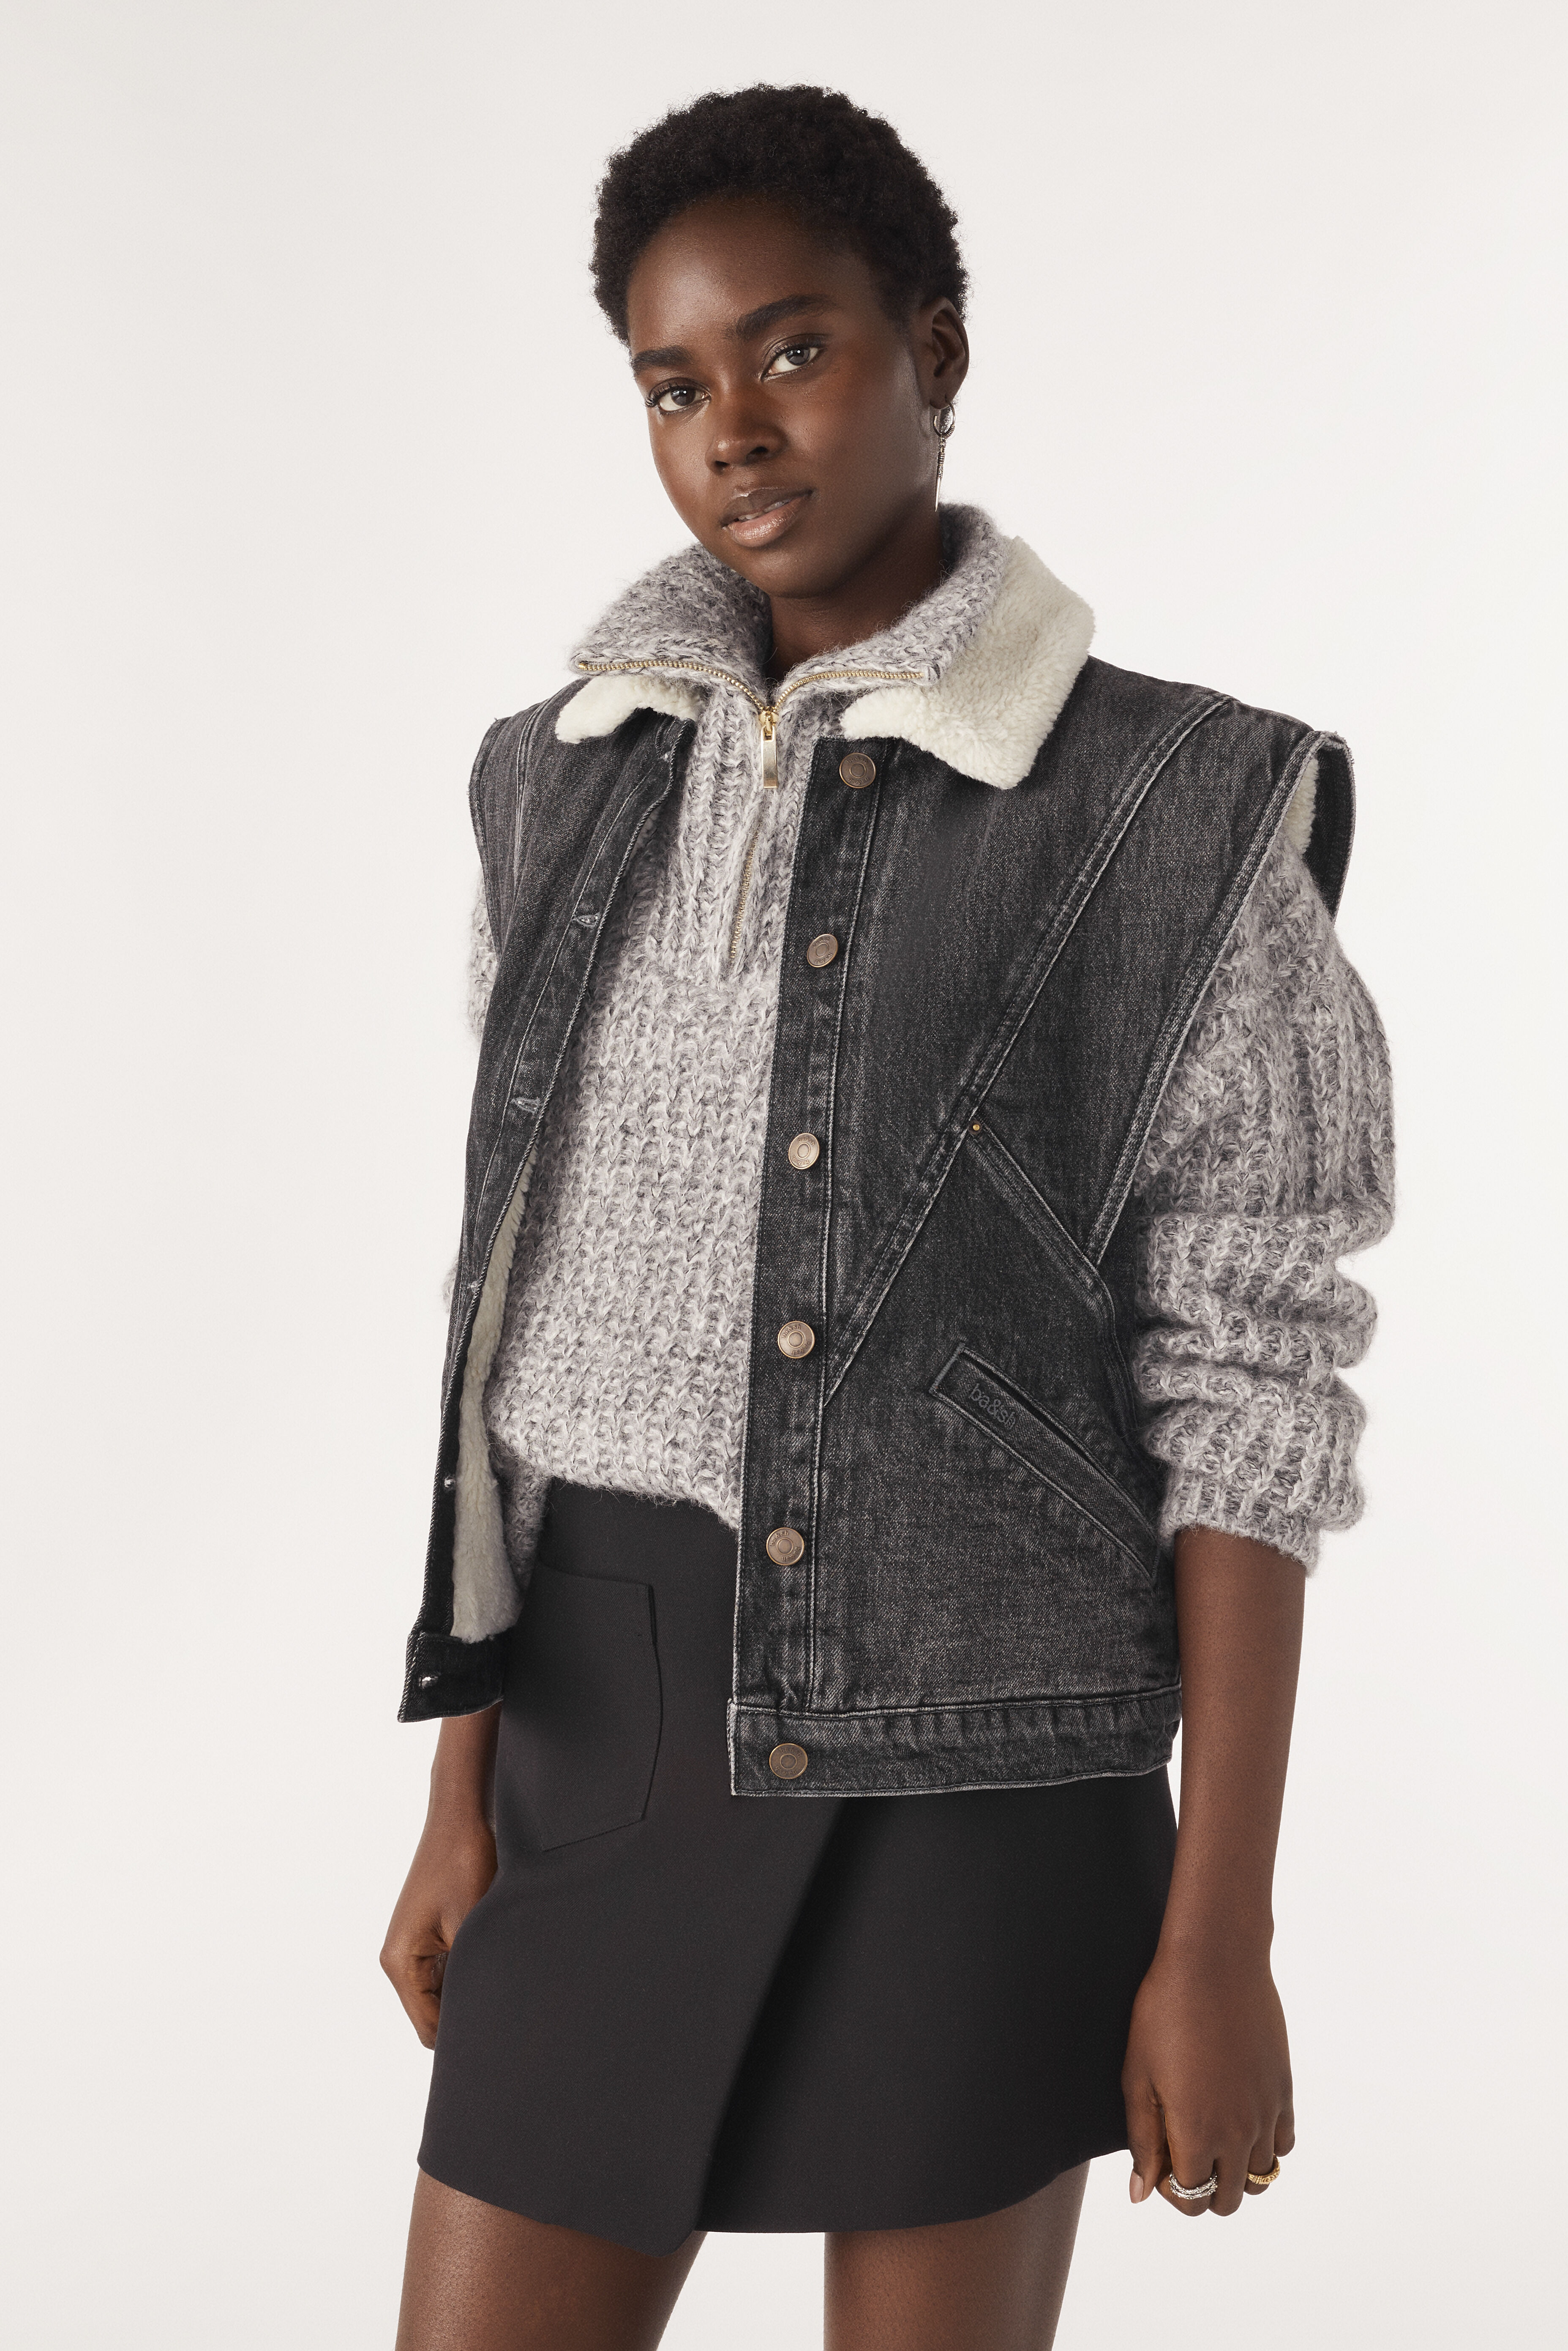 CHENGTAO Plus Size Summer Single-breasted Men's Washed Gray Denim Vest Coat  Loose Male Sleeveless Jeans Jacket Party (Color : 2, Size : 4XL.) :  Amazon.co.uk: Fashion